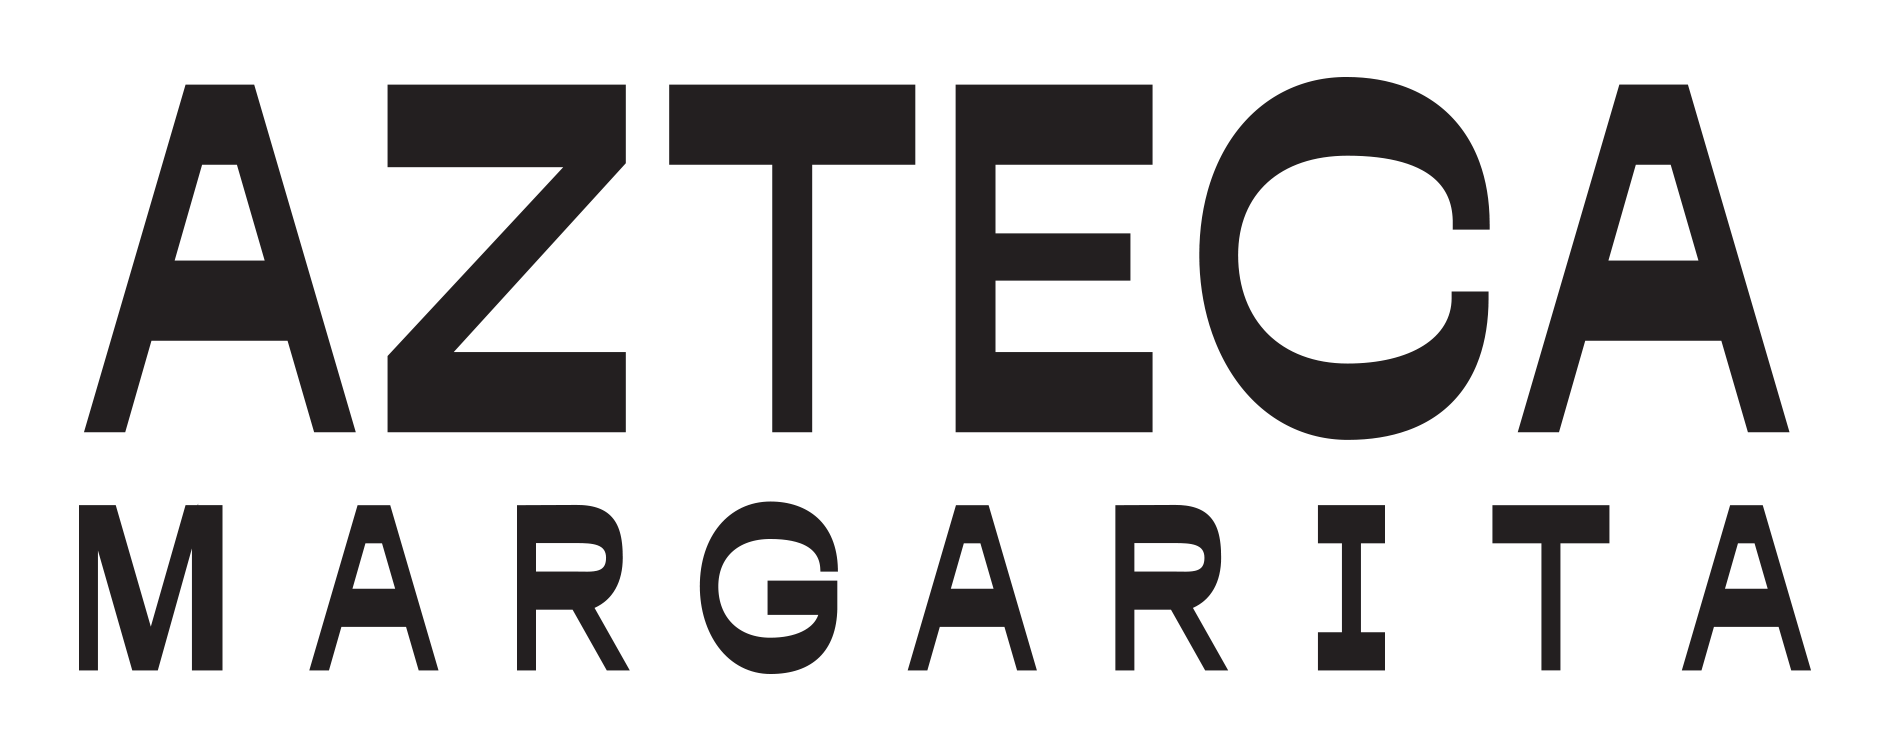 Azteca Margarita business logo 